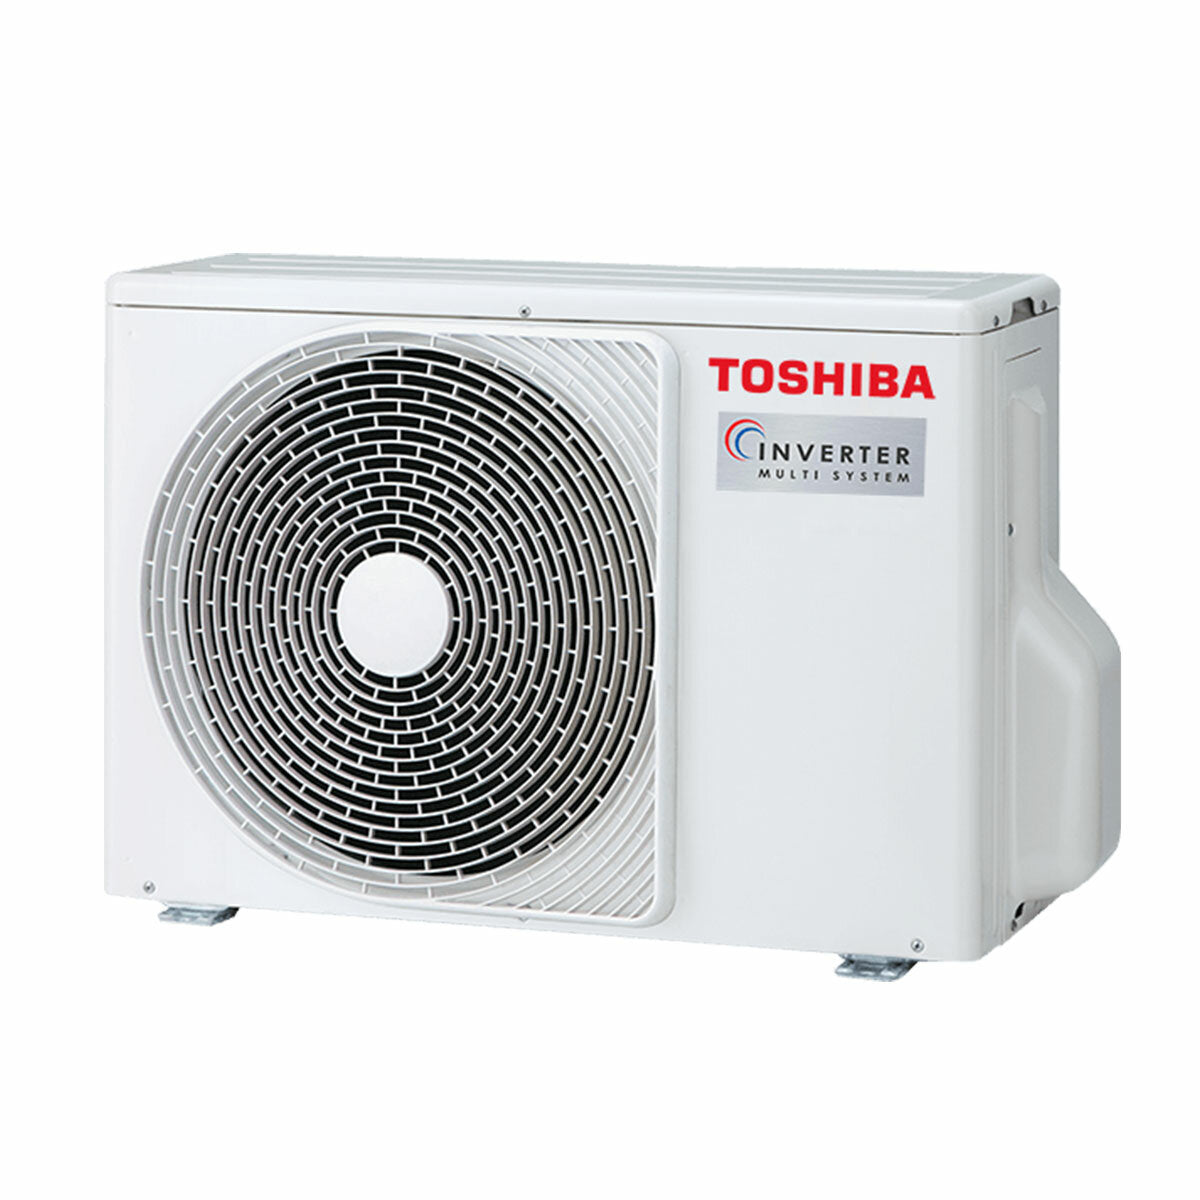 Toshiba ducted air conditioner U2 trial split 7000+9000+9000 BTU inverter A+++ external unit 5.2 kW